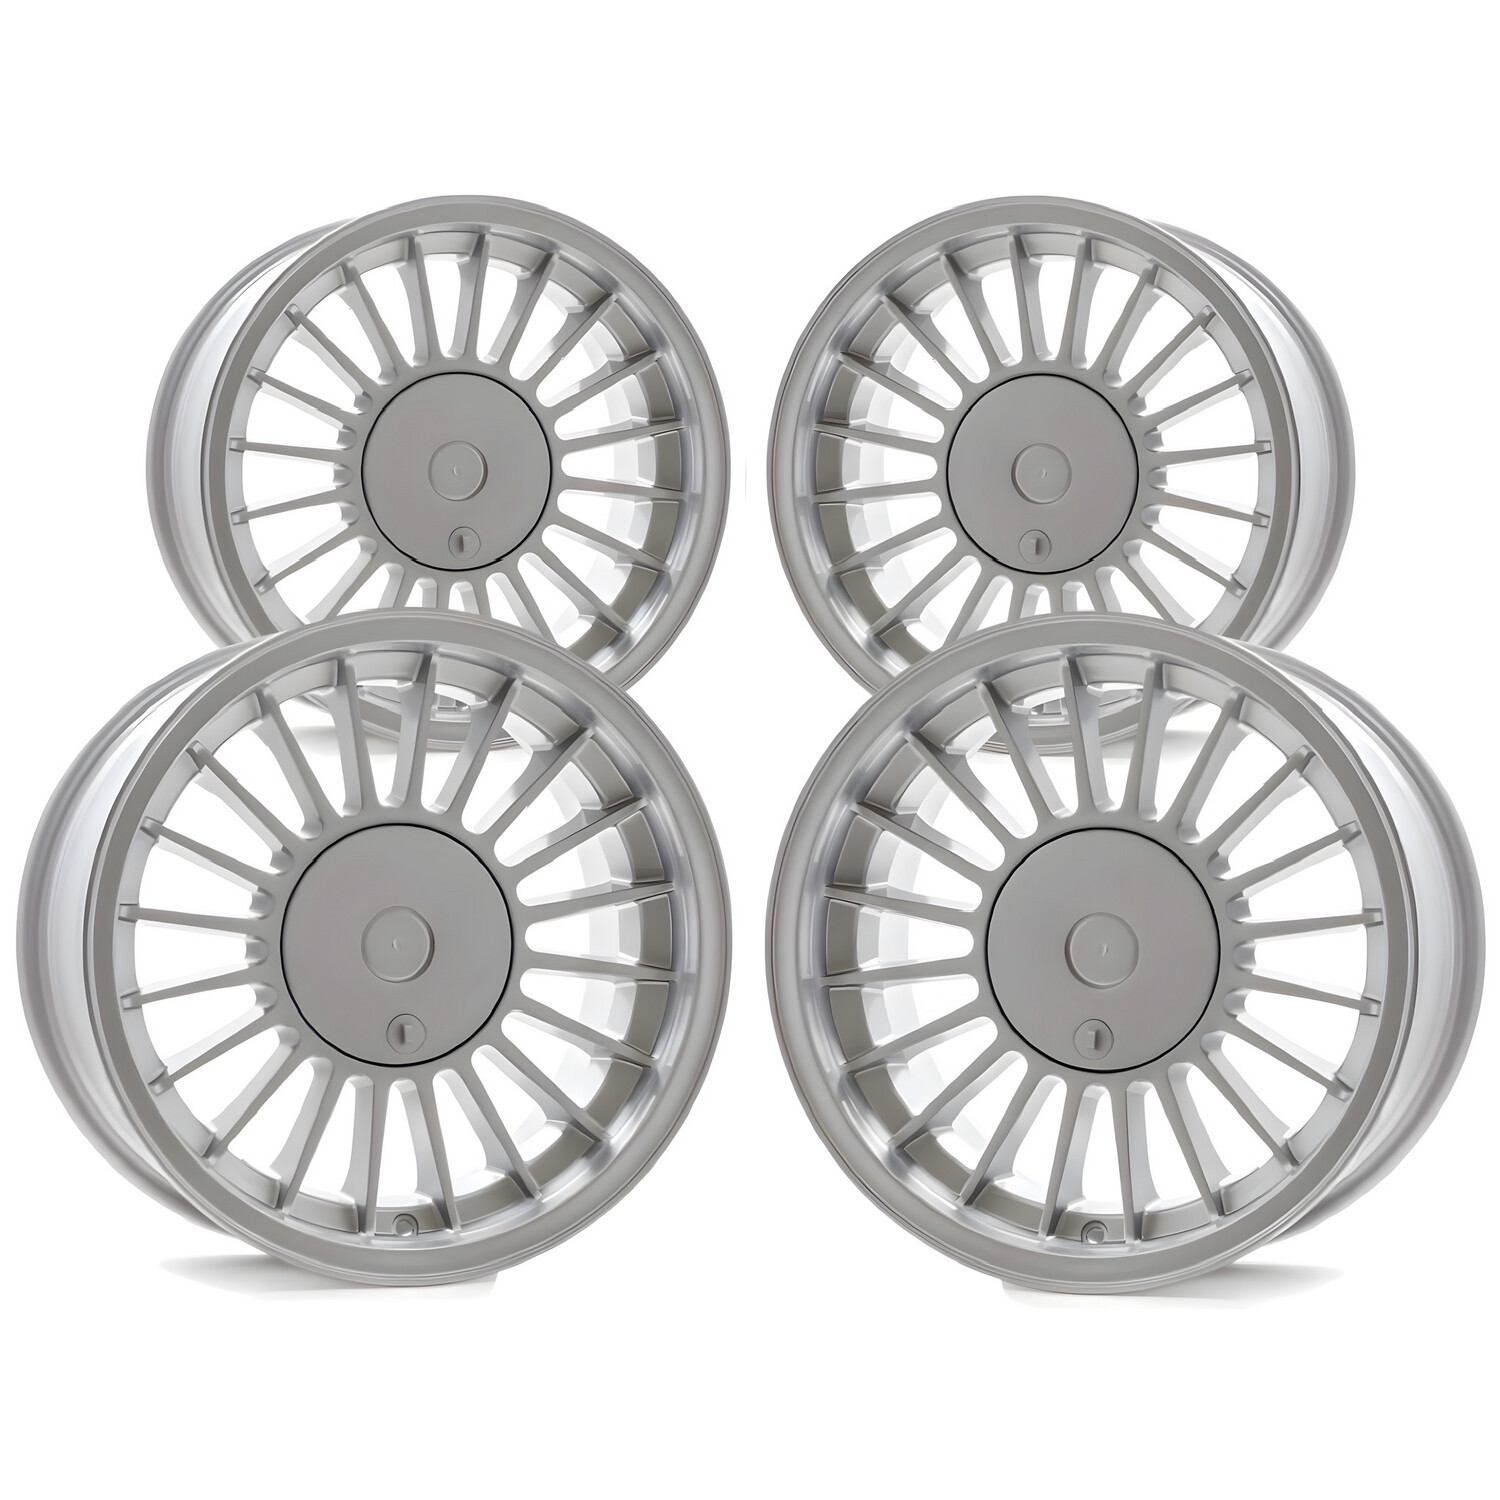 15" Maxilite Alpina Classic Softline Style Wheels (4x100 15x7 ET12)